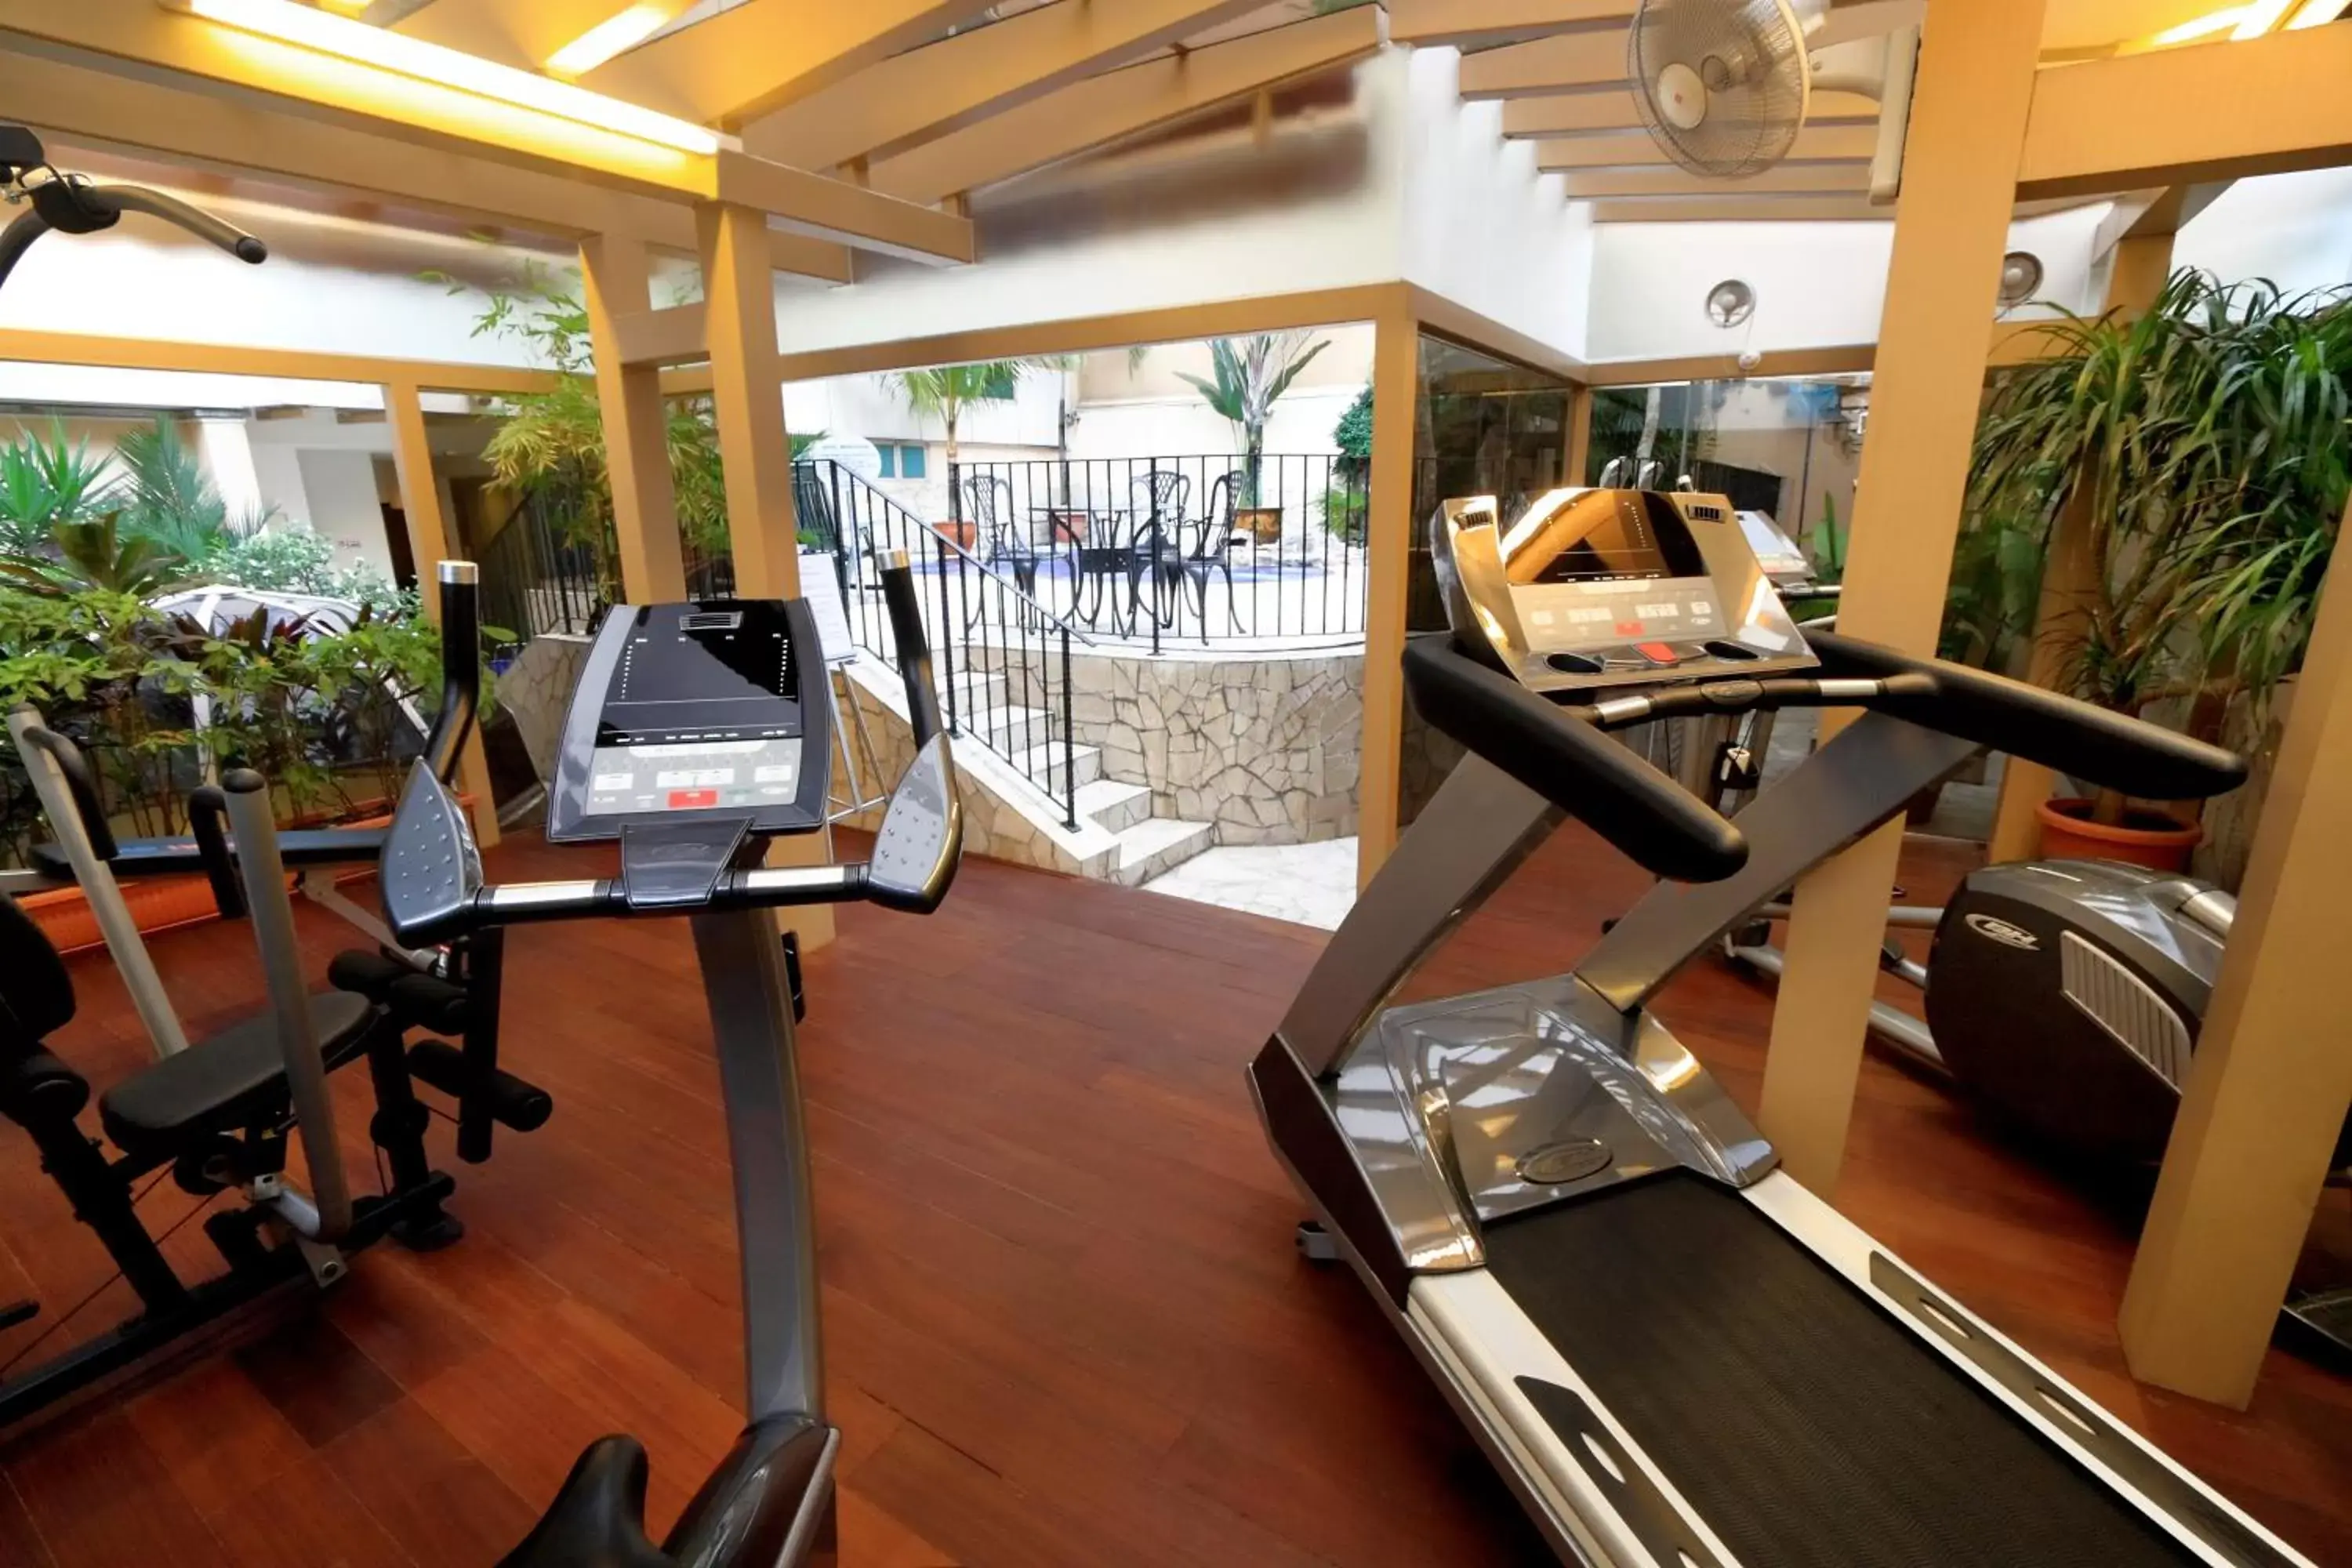 Fitness centre/facilities, Fitness Center/Facilities in Hotel Bencoolen Singapore